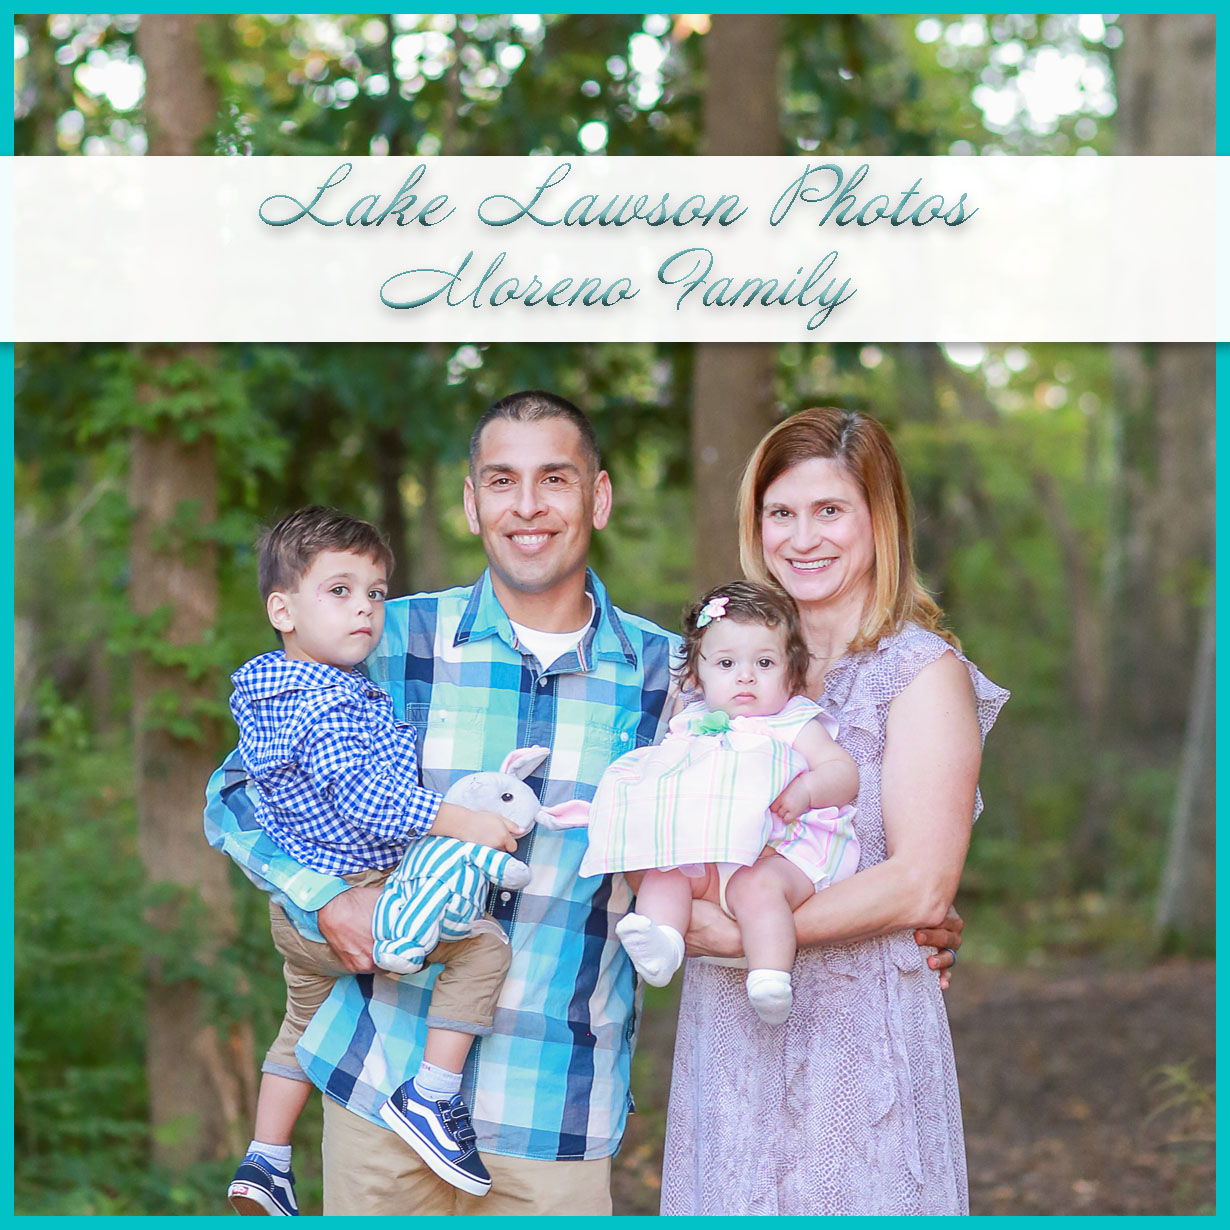 Lake Lawson Family Photoshoot